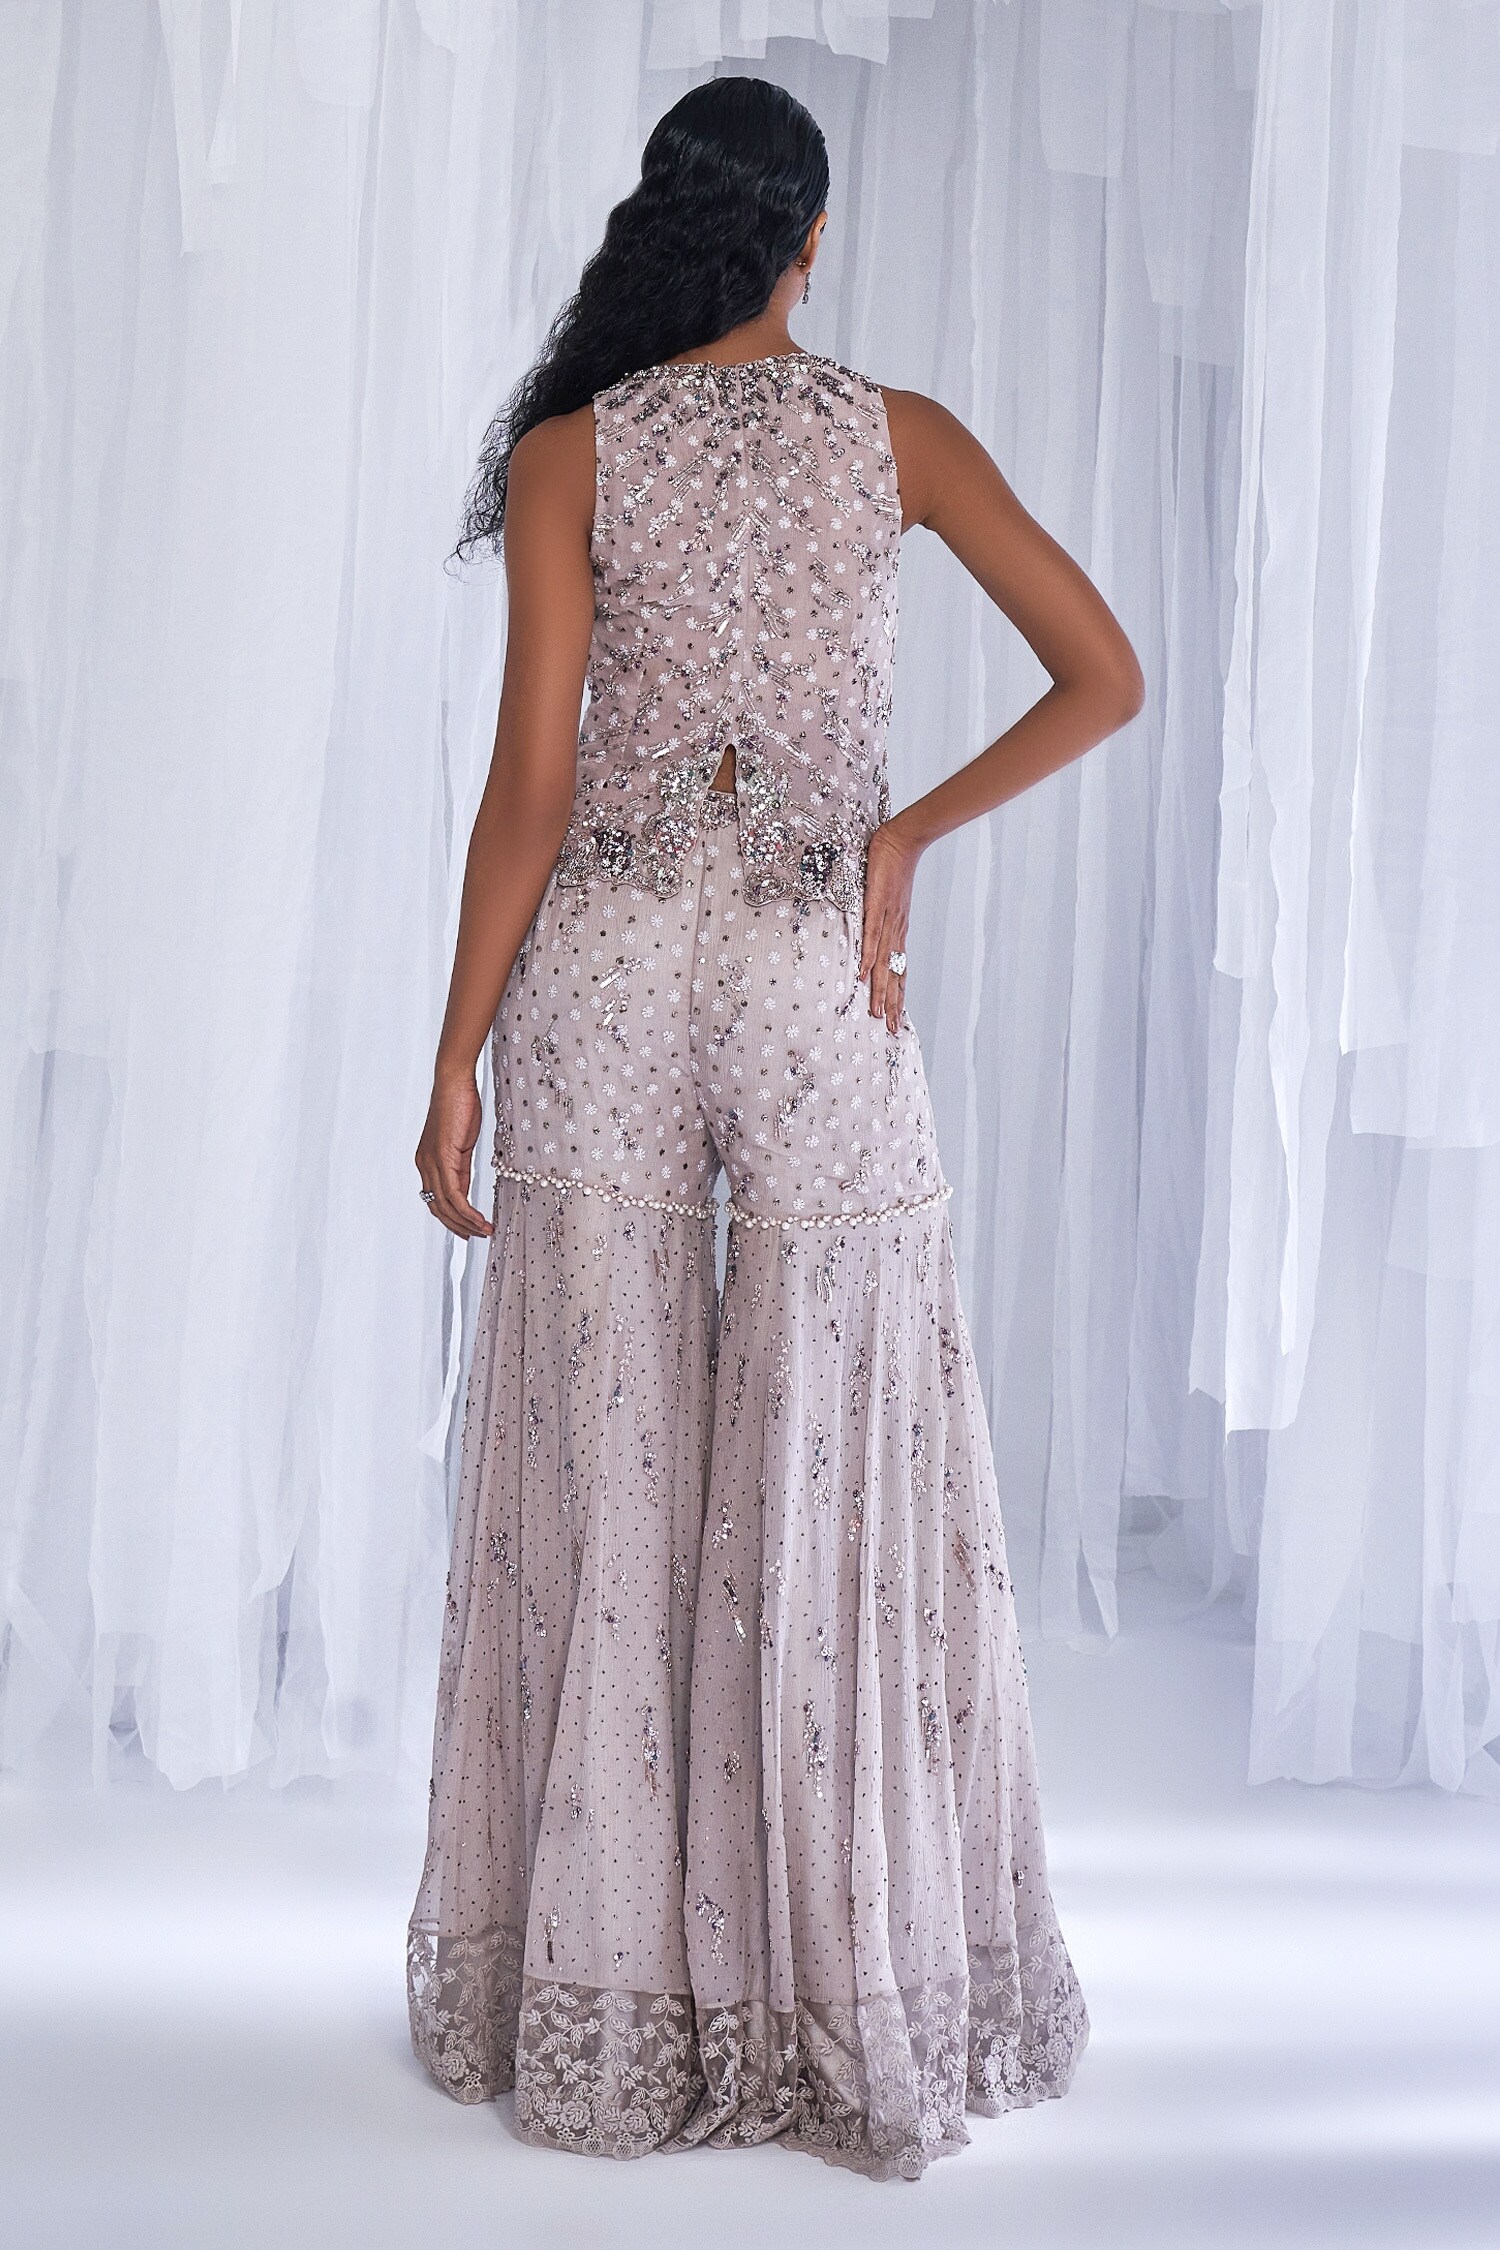 DIVARA - Crystal Lace for Saree,Suit,Dresses Embellishment